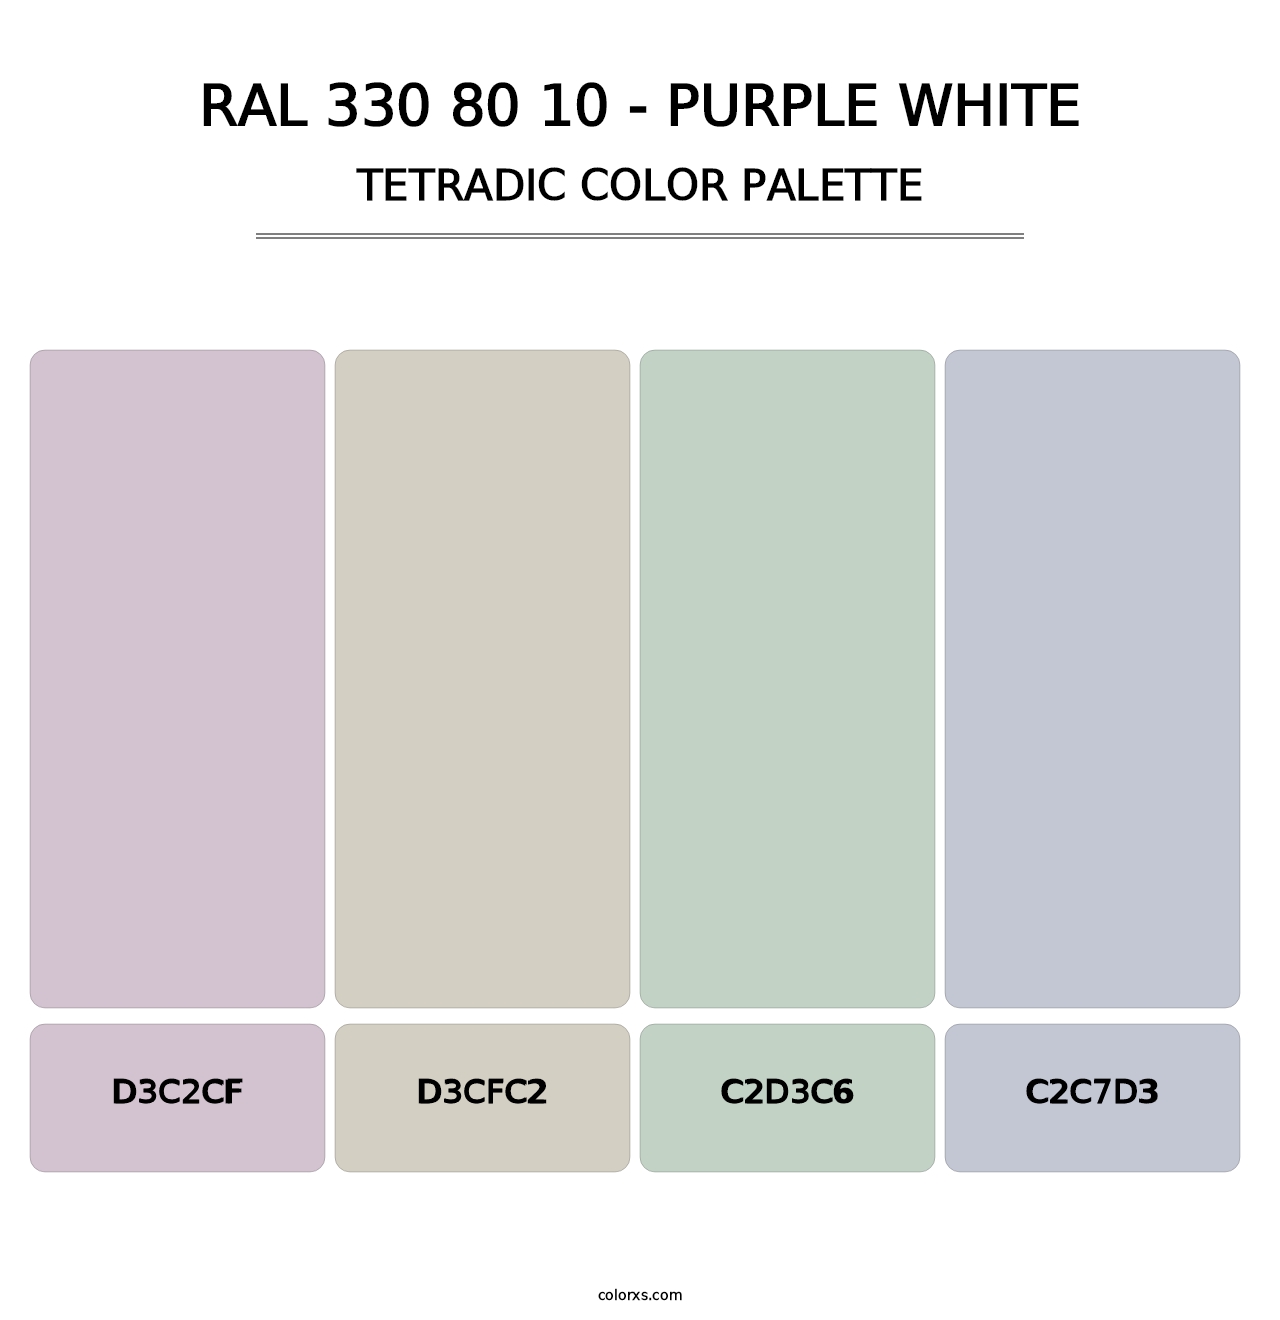 RAL 330 80 10 - Purple White - Tetradic Color Palette